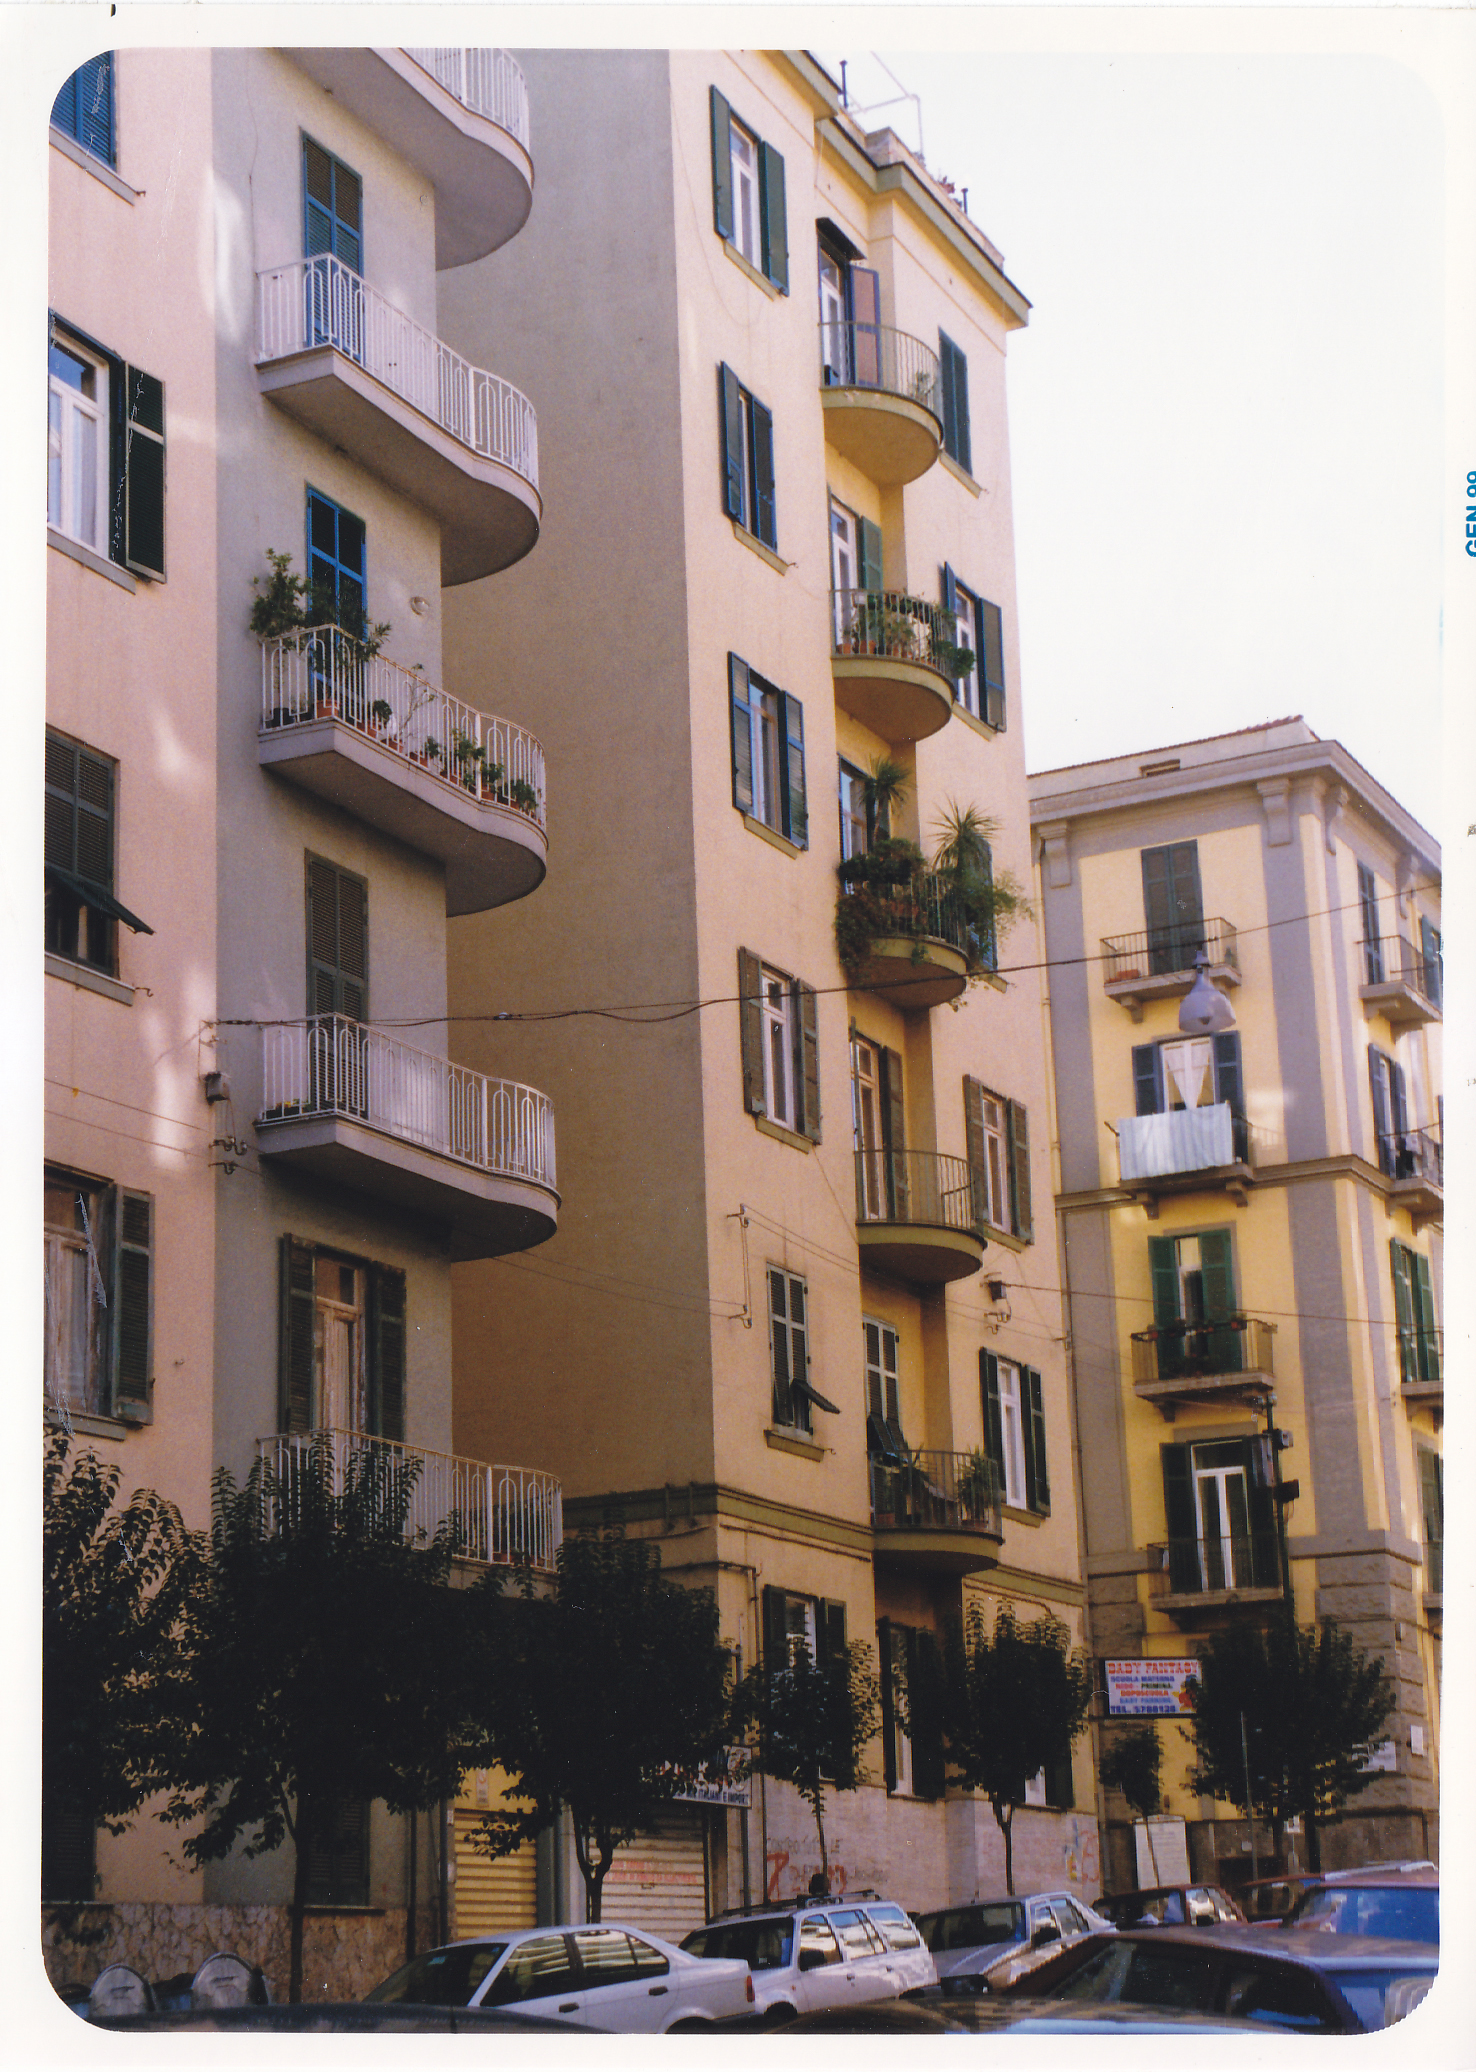 igmota - Via Raffaele Tarantino, 20 (palazzo, residenziale) - Napoli (NA) 